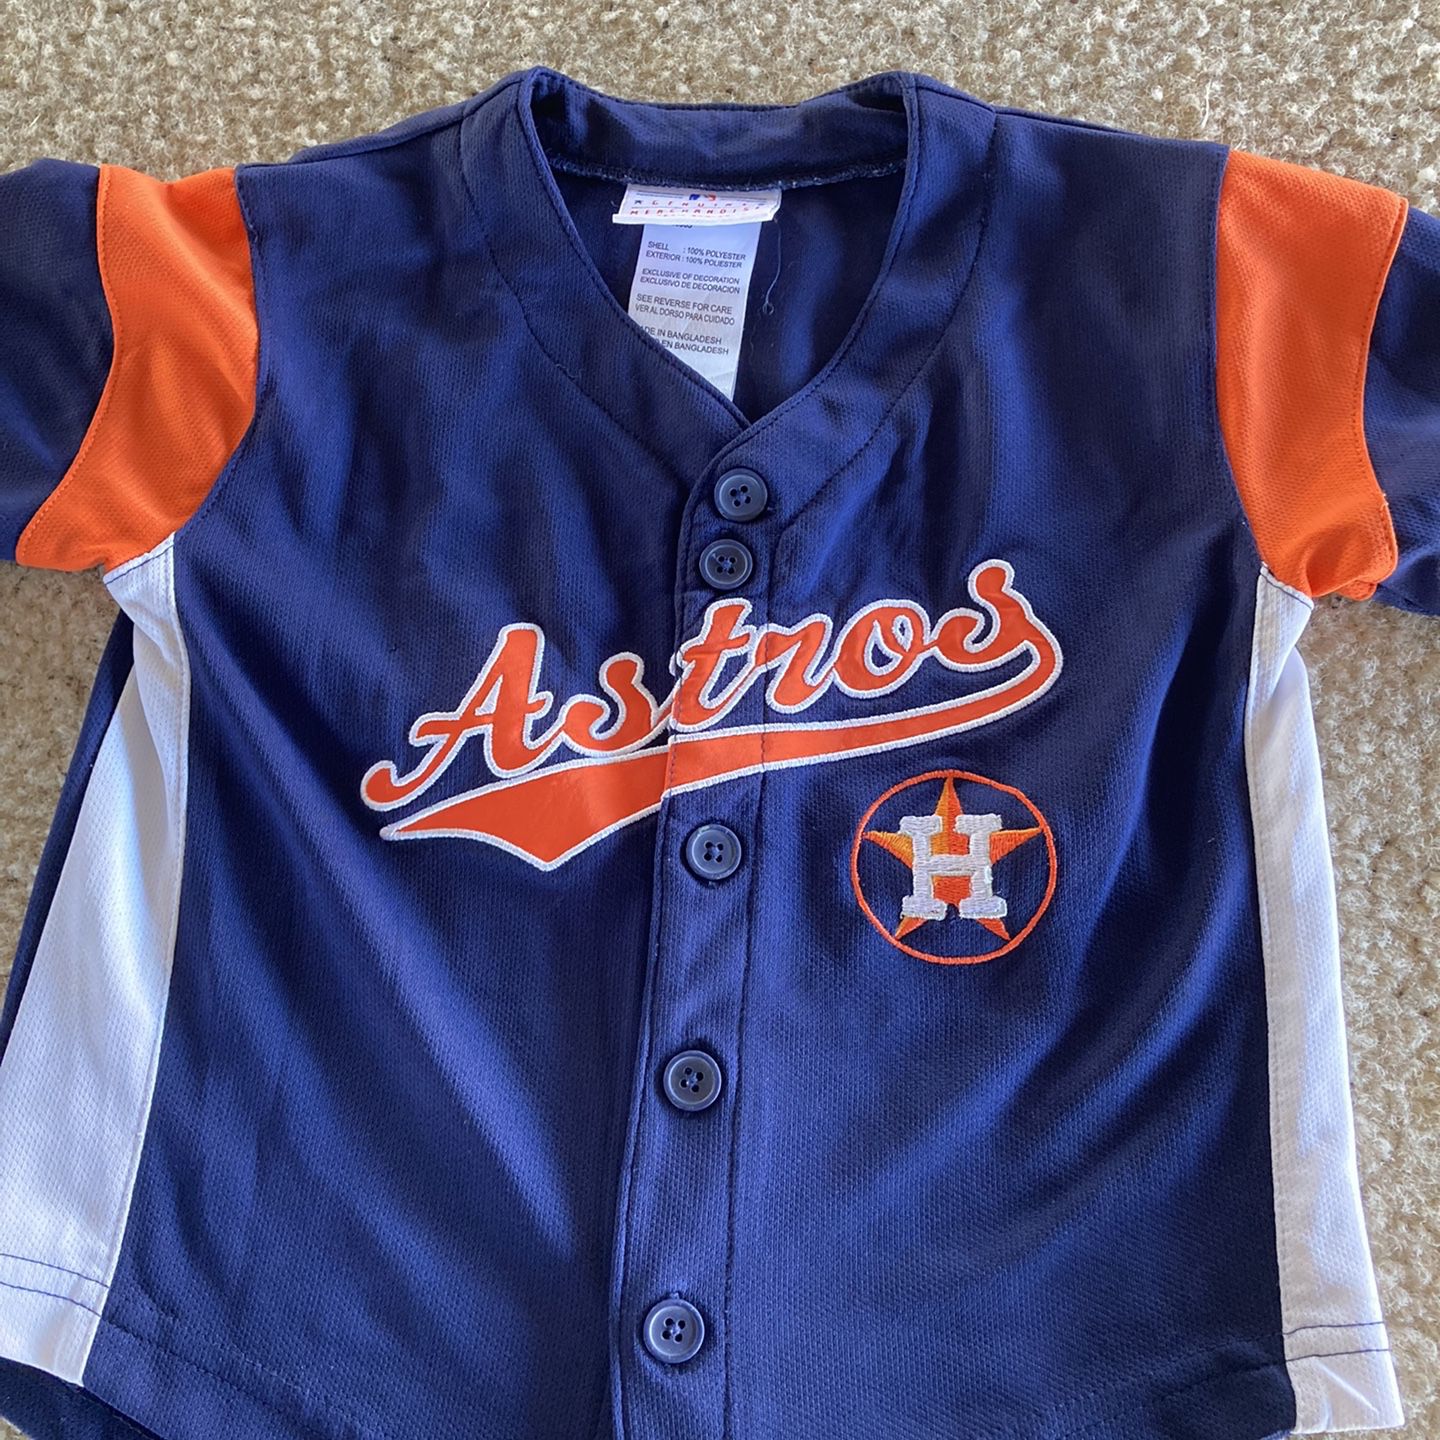 Little Kids Houston Astros Jersey (3T) for Sale in Mcallen, TX - OfferUp